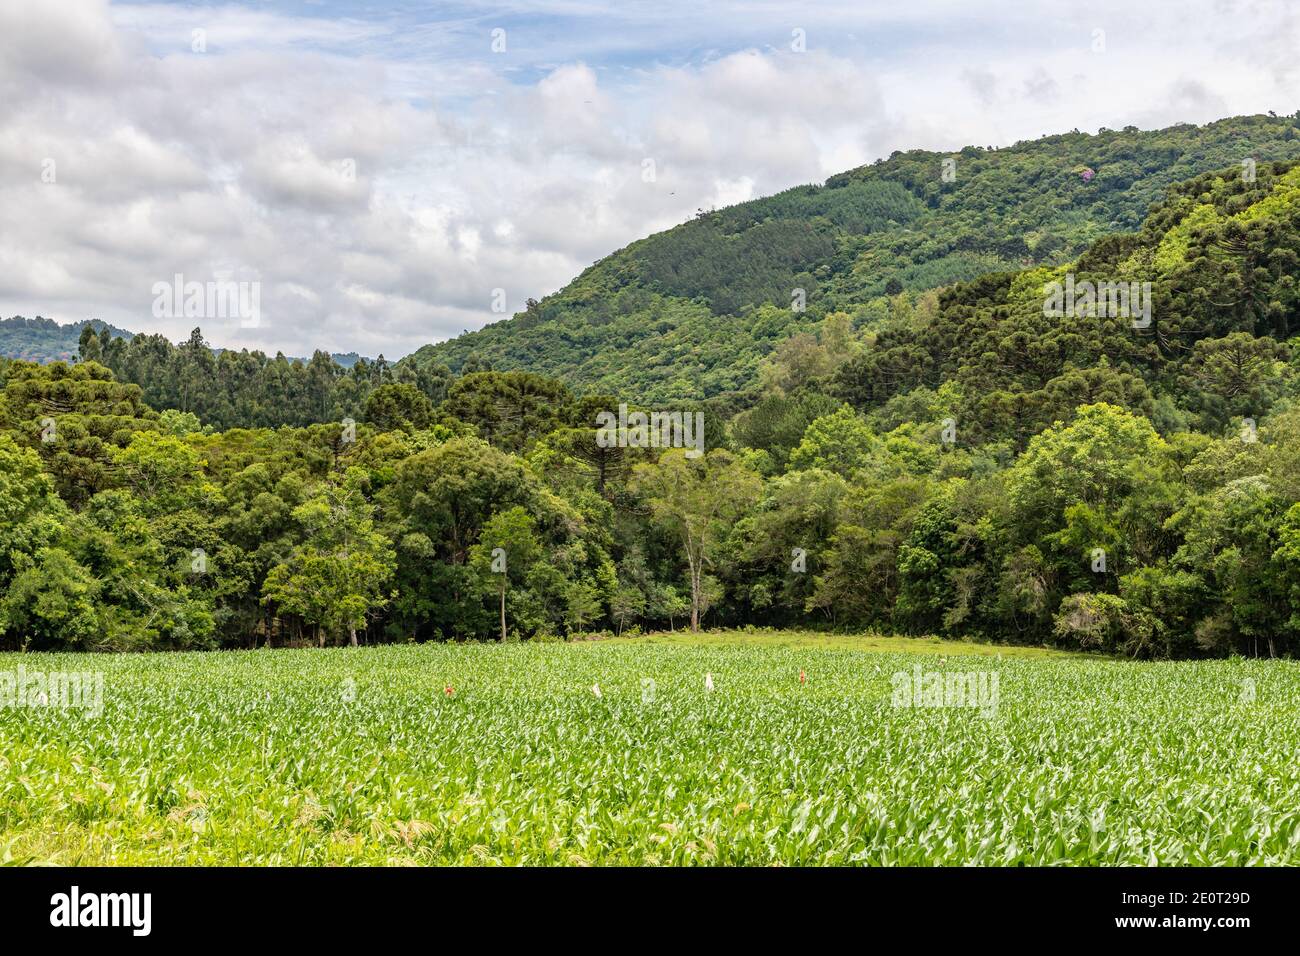 Farm field and forest in Morro do Xaxim mountain, Igrejinha, Rio Grande do Sul, Brazil Stock Photo